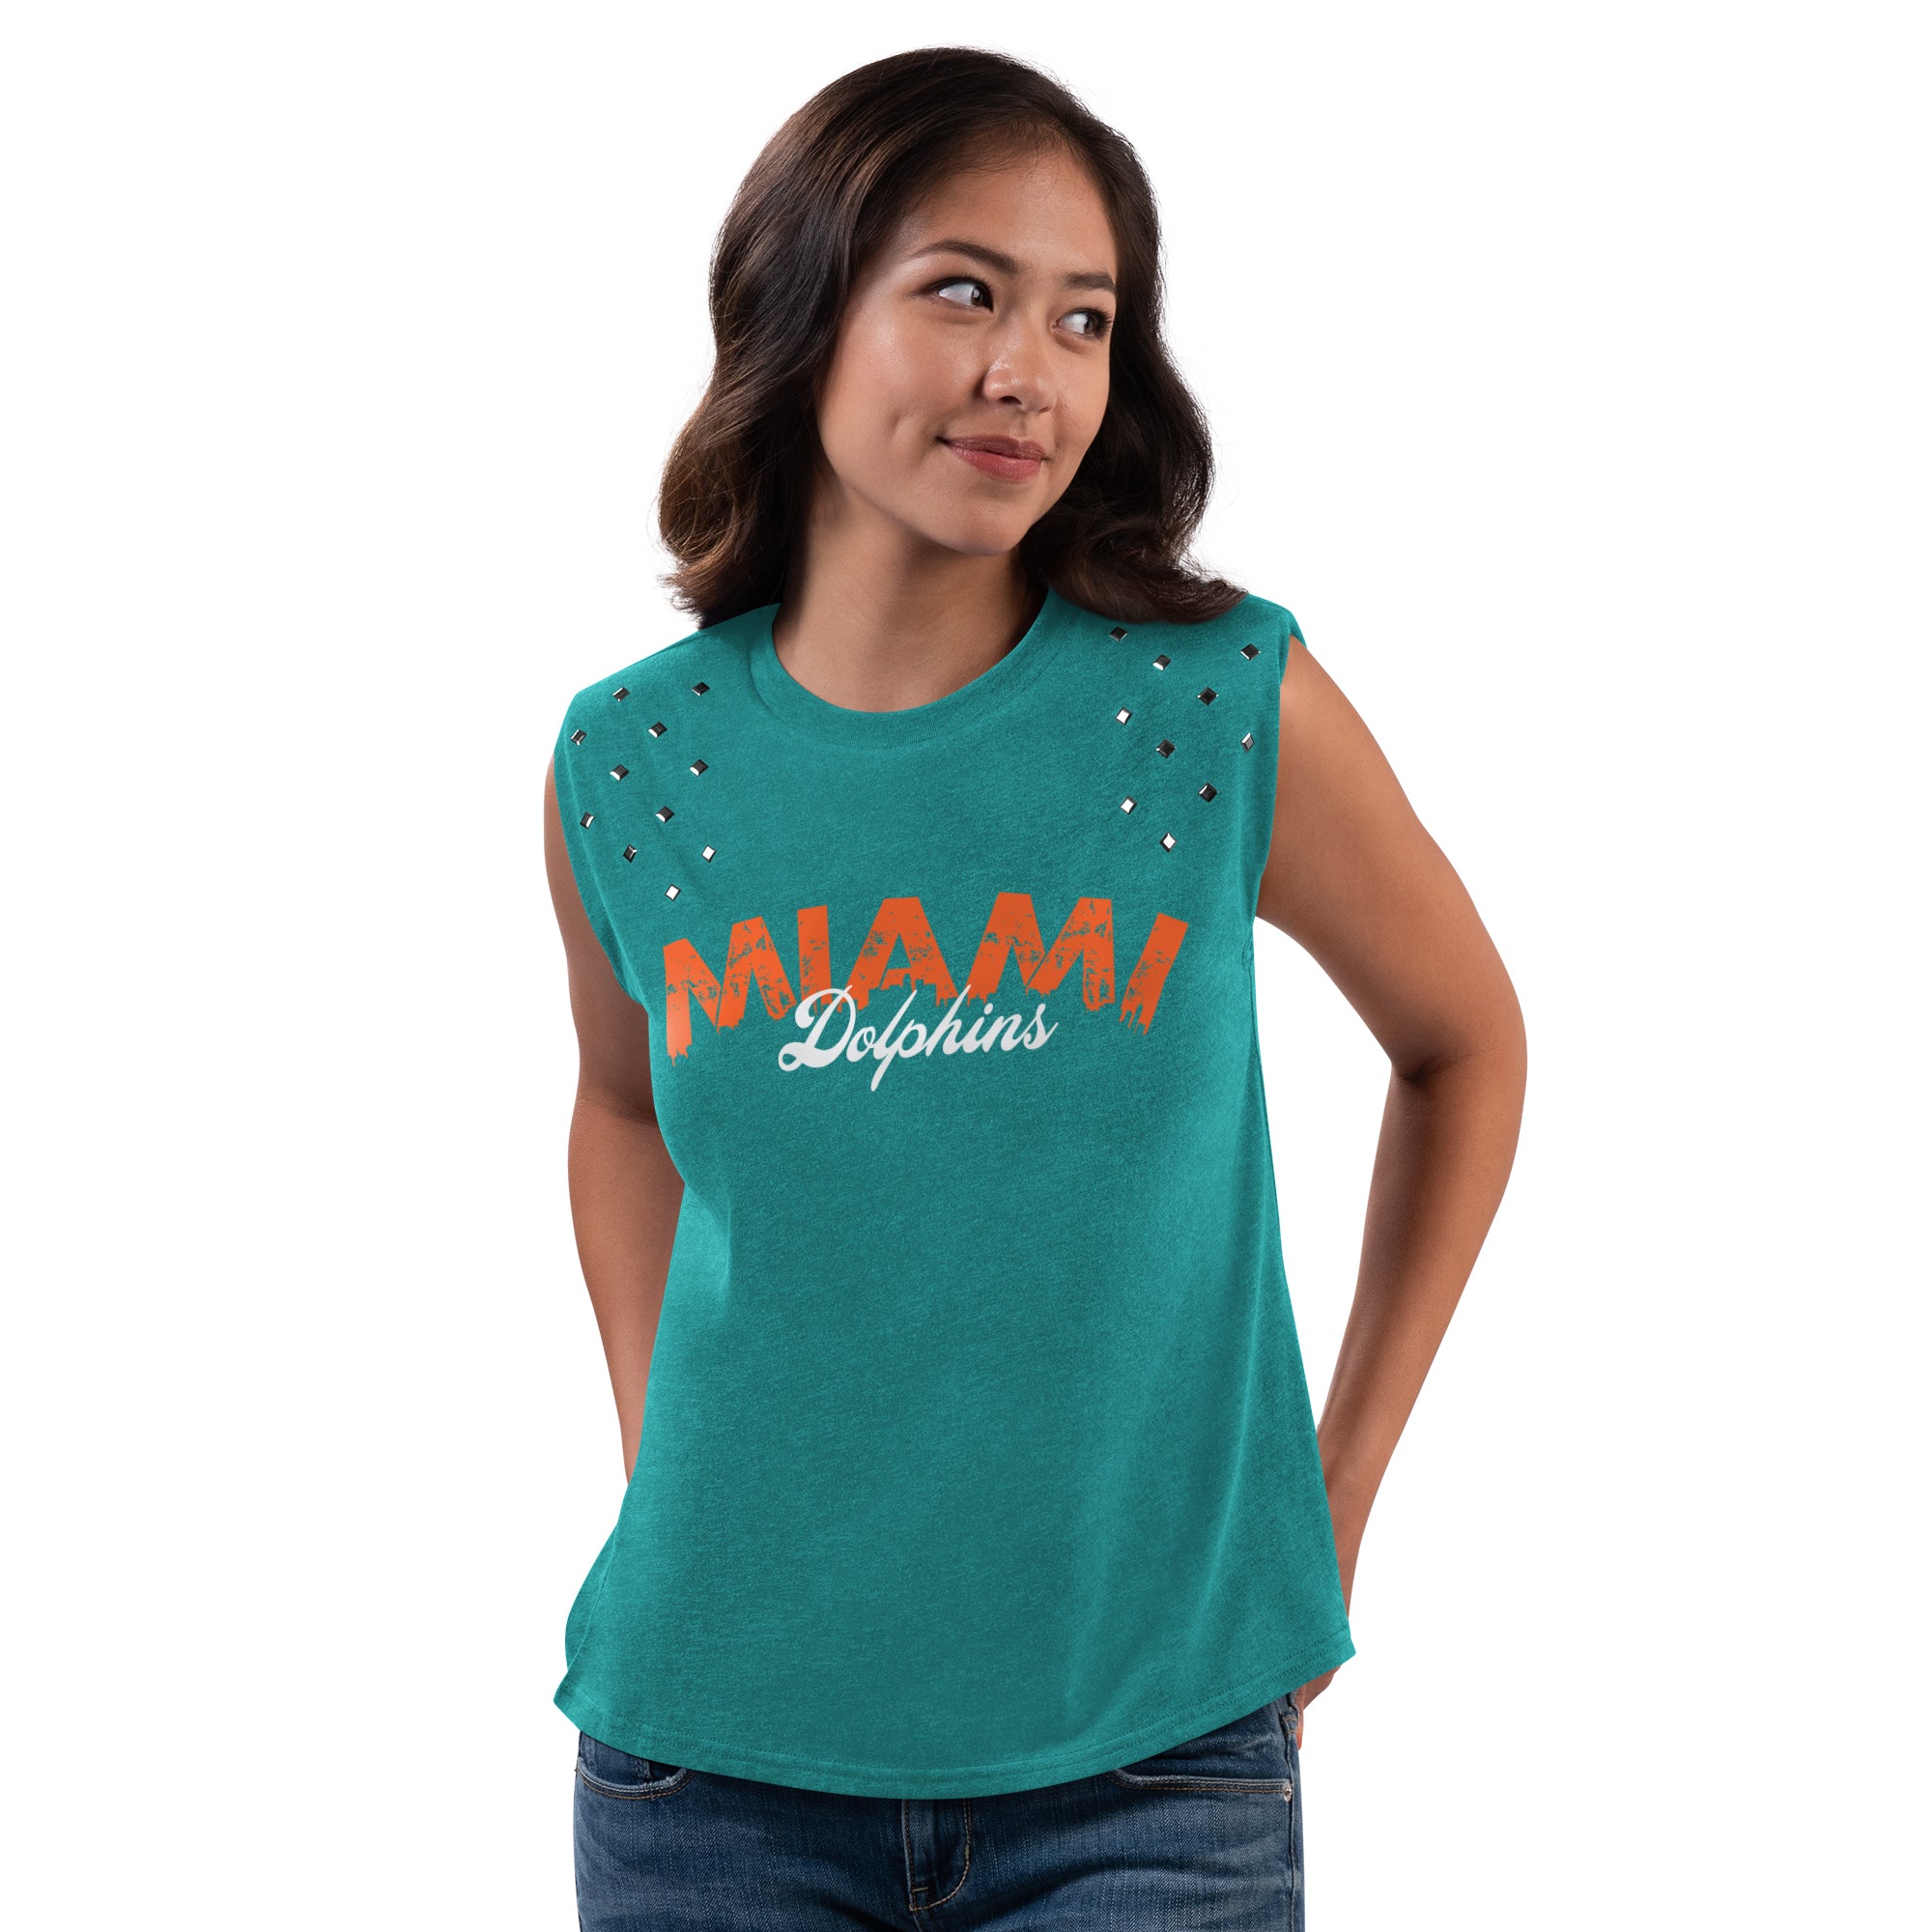 Miami Dolphins G-lll 4Her Women's Sleeveless shirt